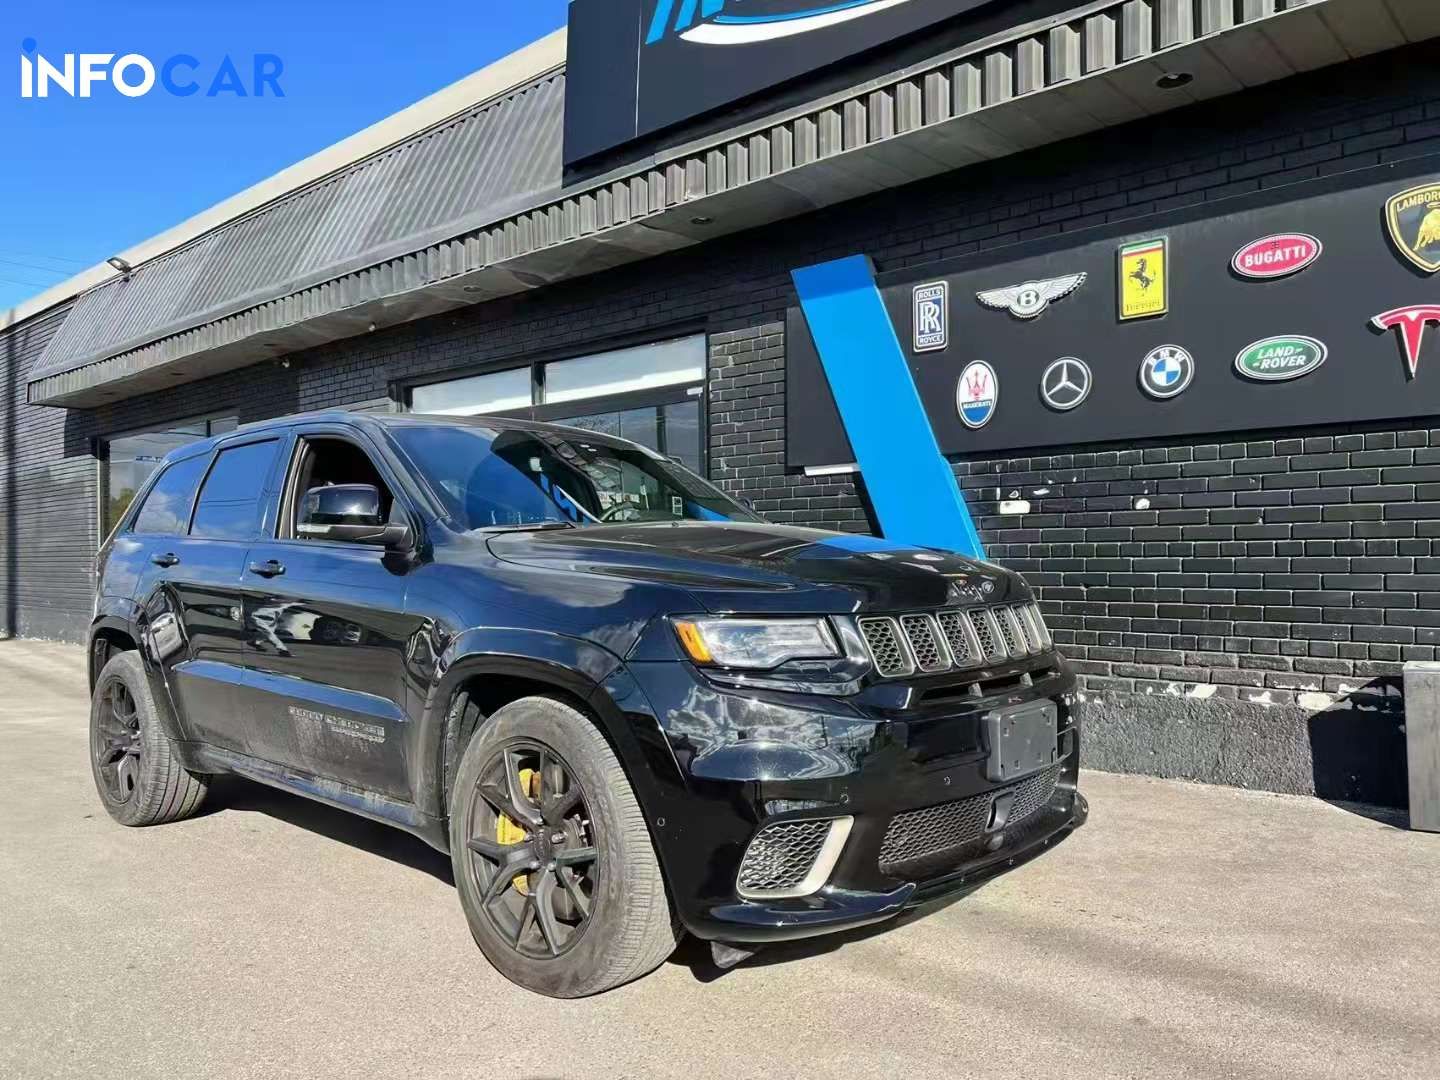 2021 Jeep Grand Cherokee Trackhawk - INFOCAR - Toronto Auto Trading Platform